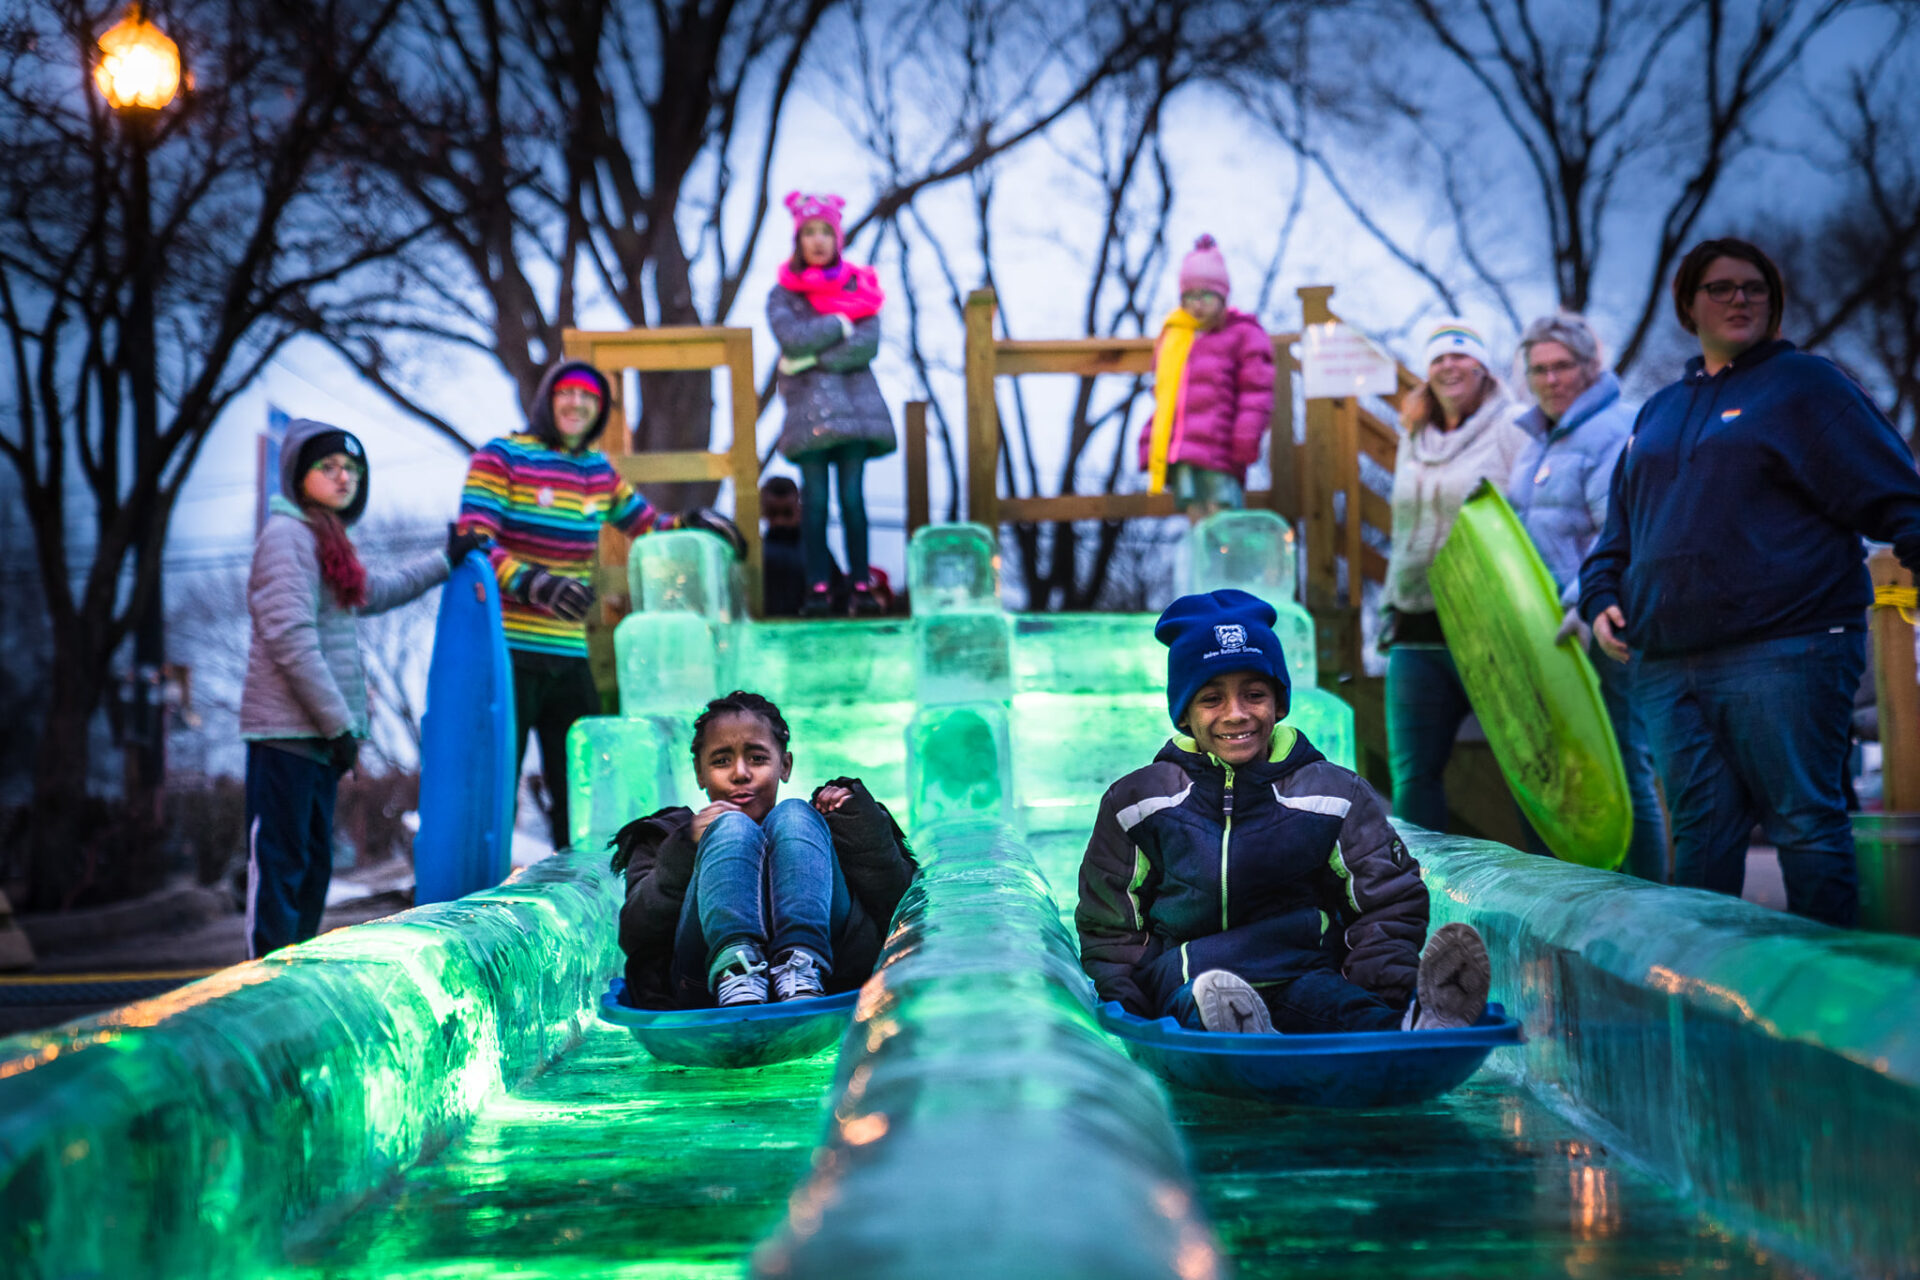 IceFest 2022 brings winter fun to Chambersburg this weekend